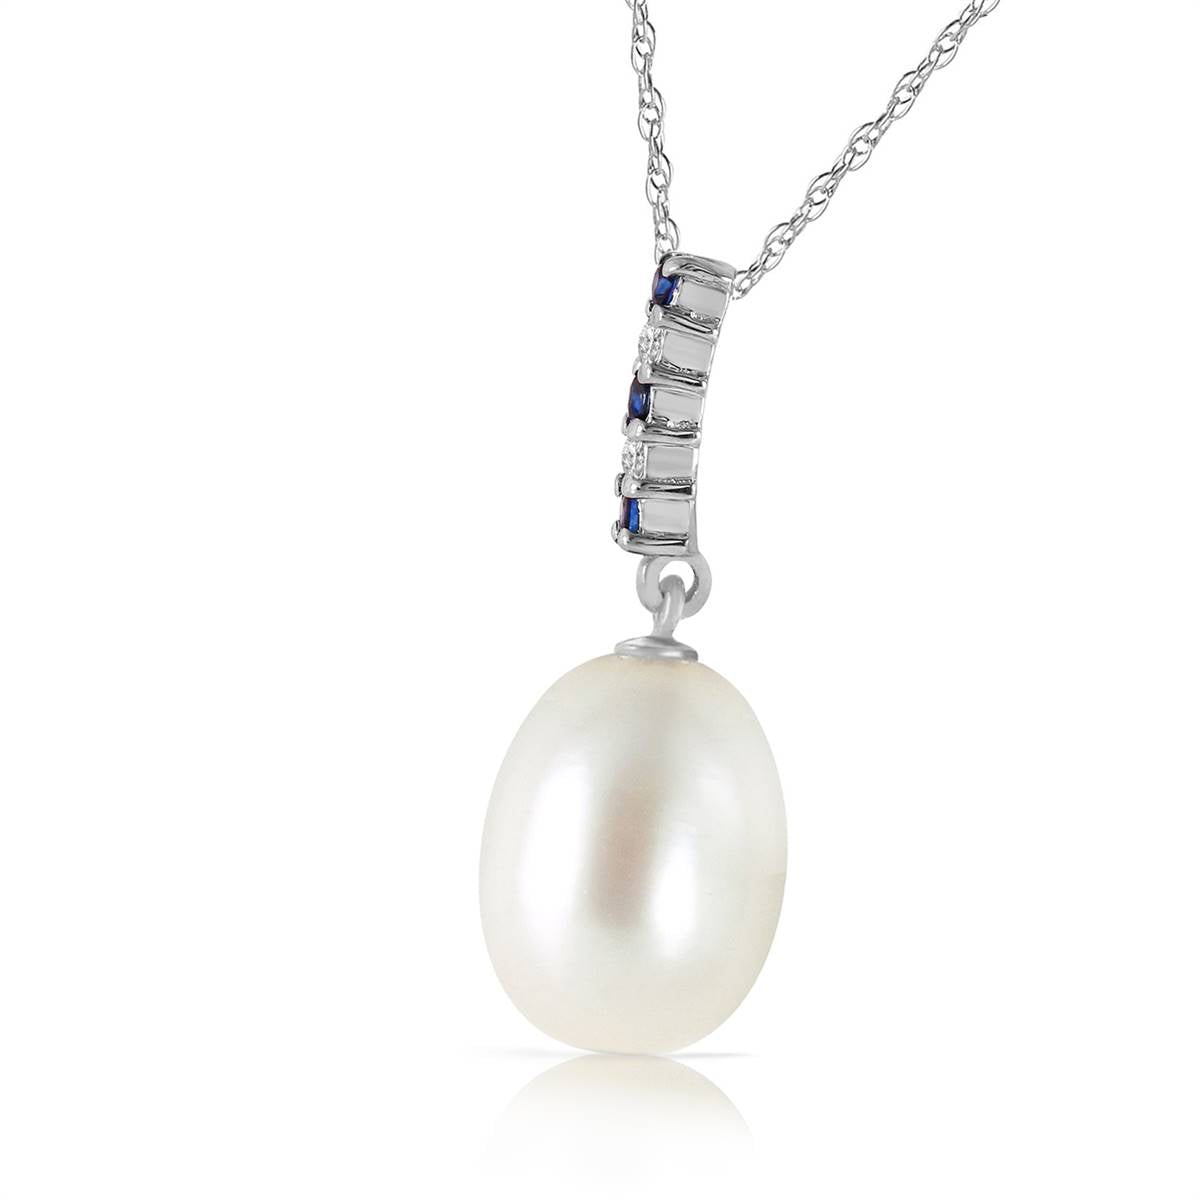 4.15 Carat 14K Solid White Gold Necklace Diamond, Sapphire Briolette Pearl